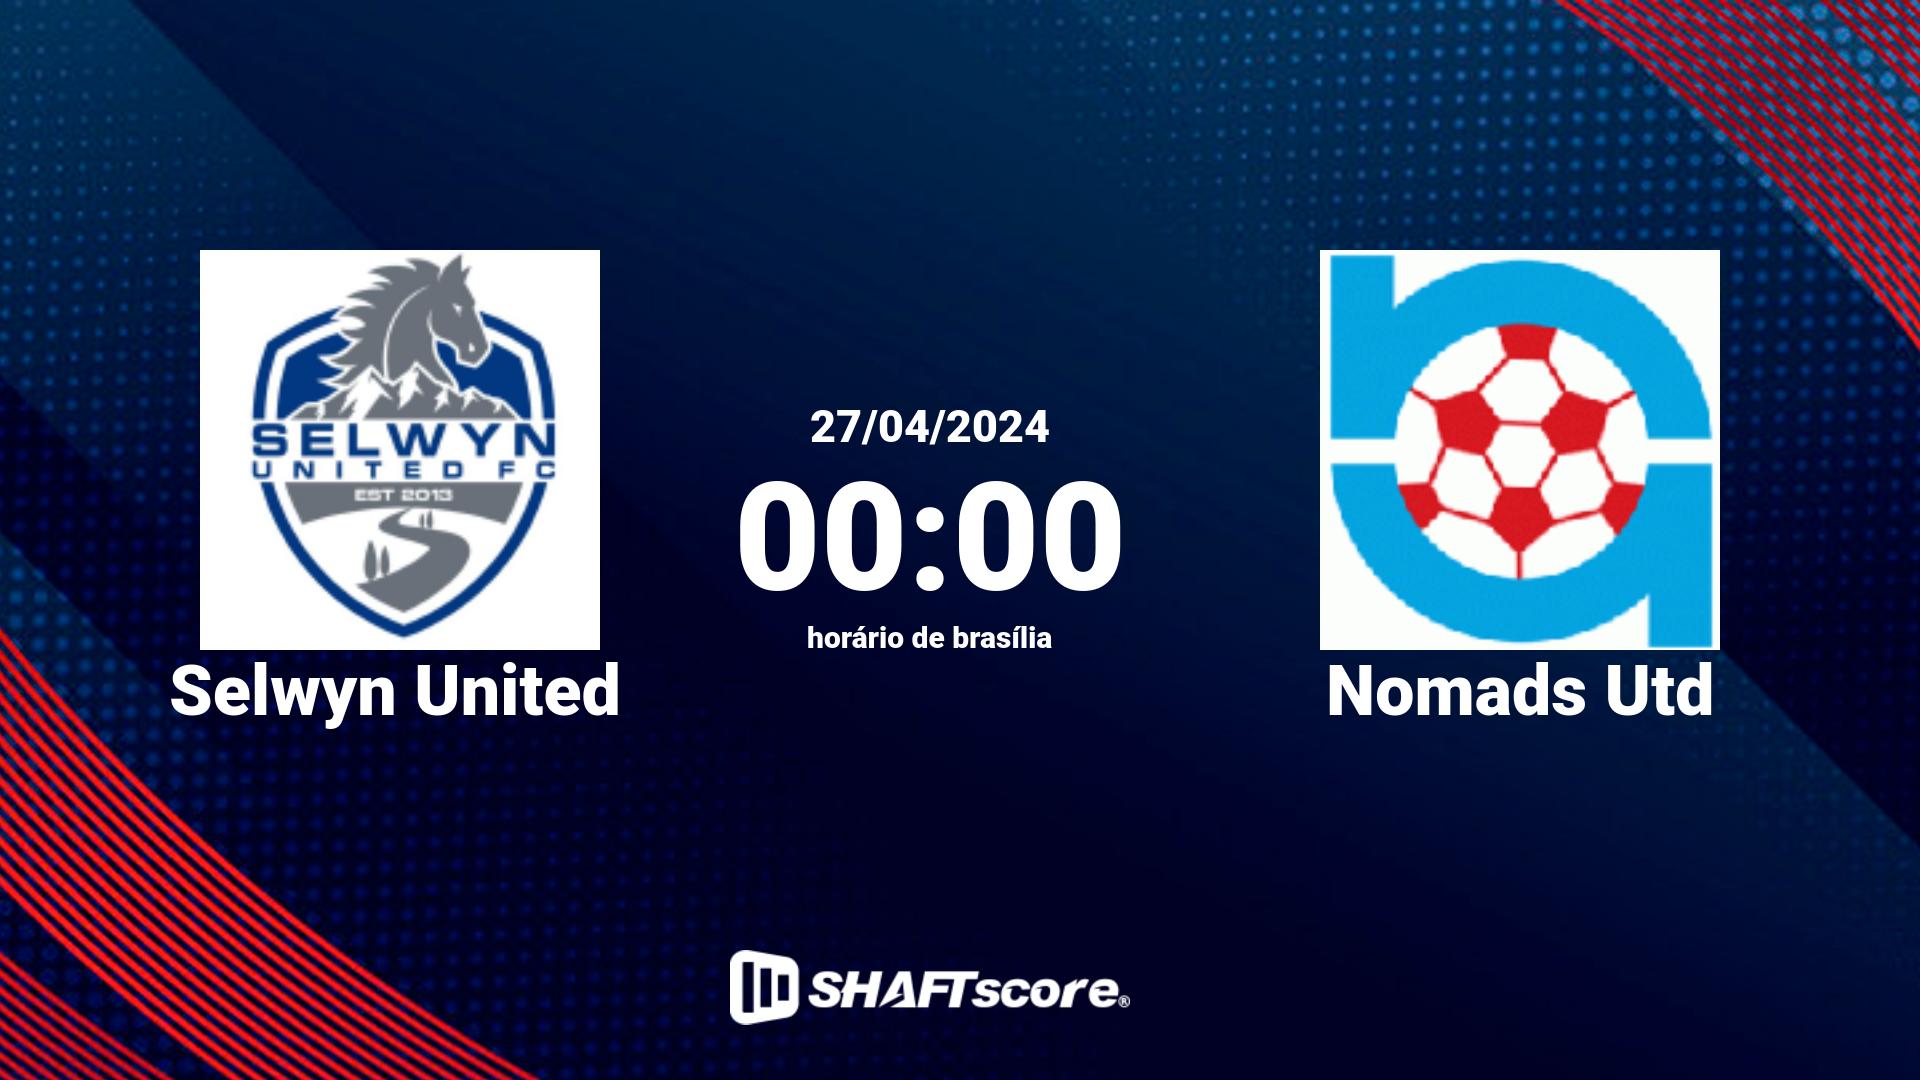 Estatísticas do jogo Selwyn United vs Nomads Utd 27.04 00:00